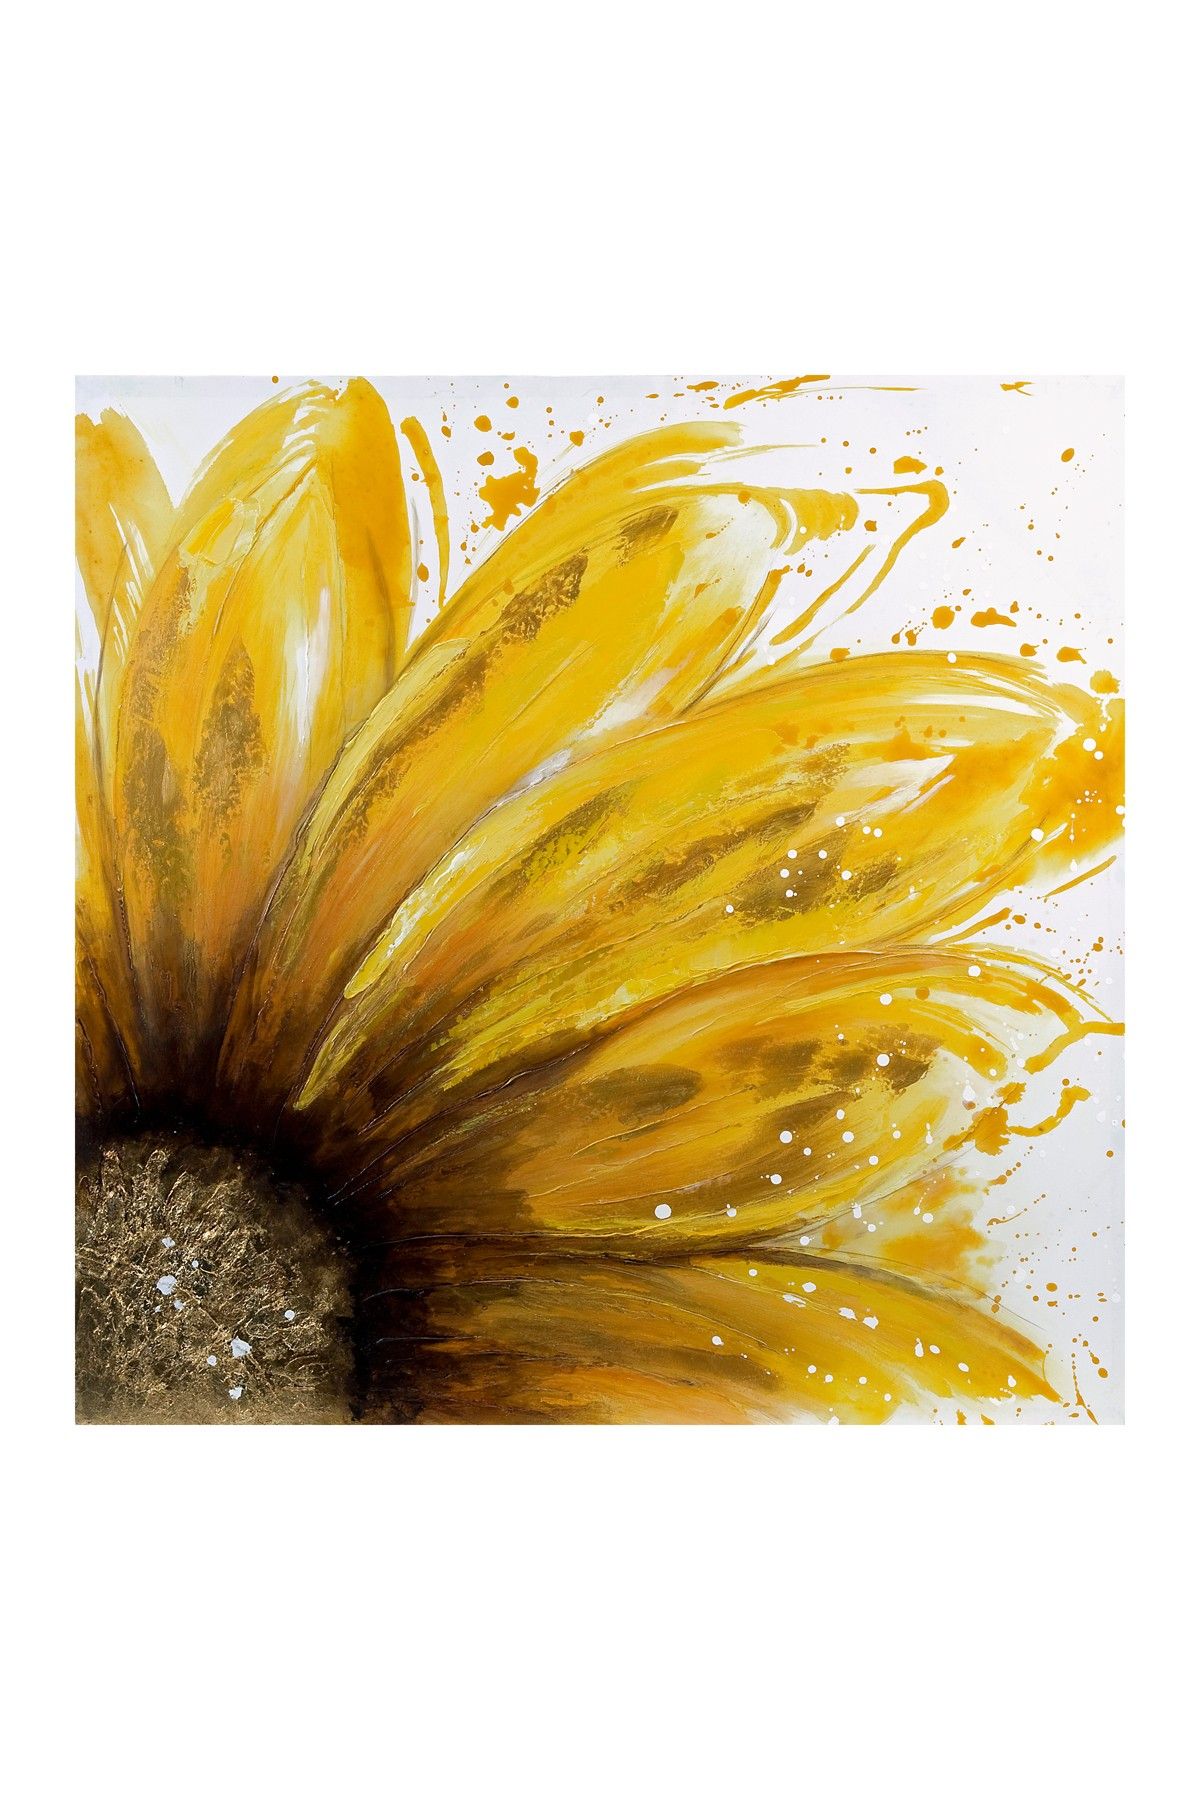 Yellow sunflower illustration photo